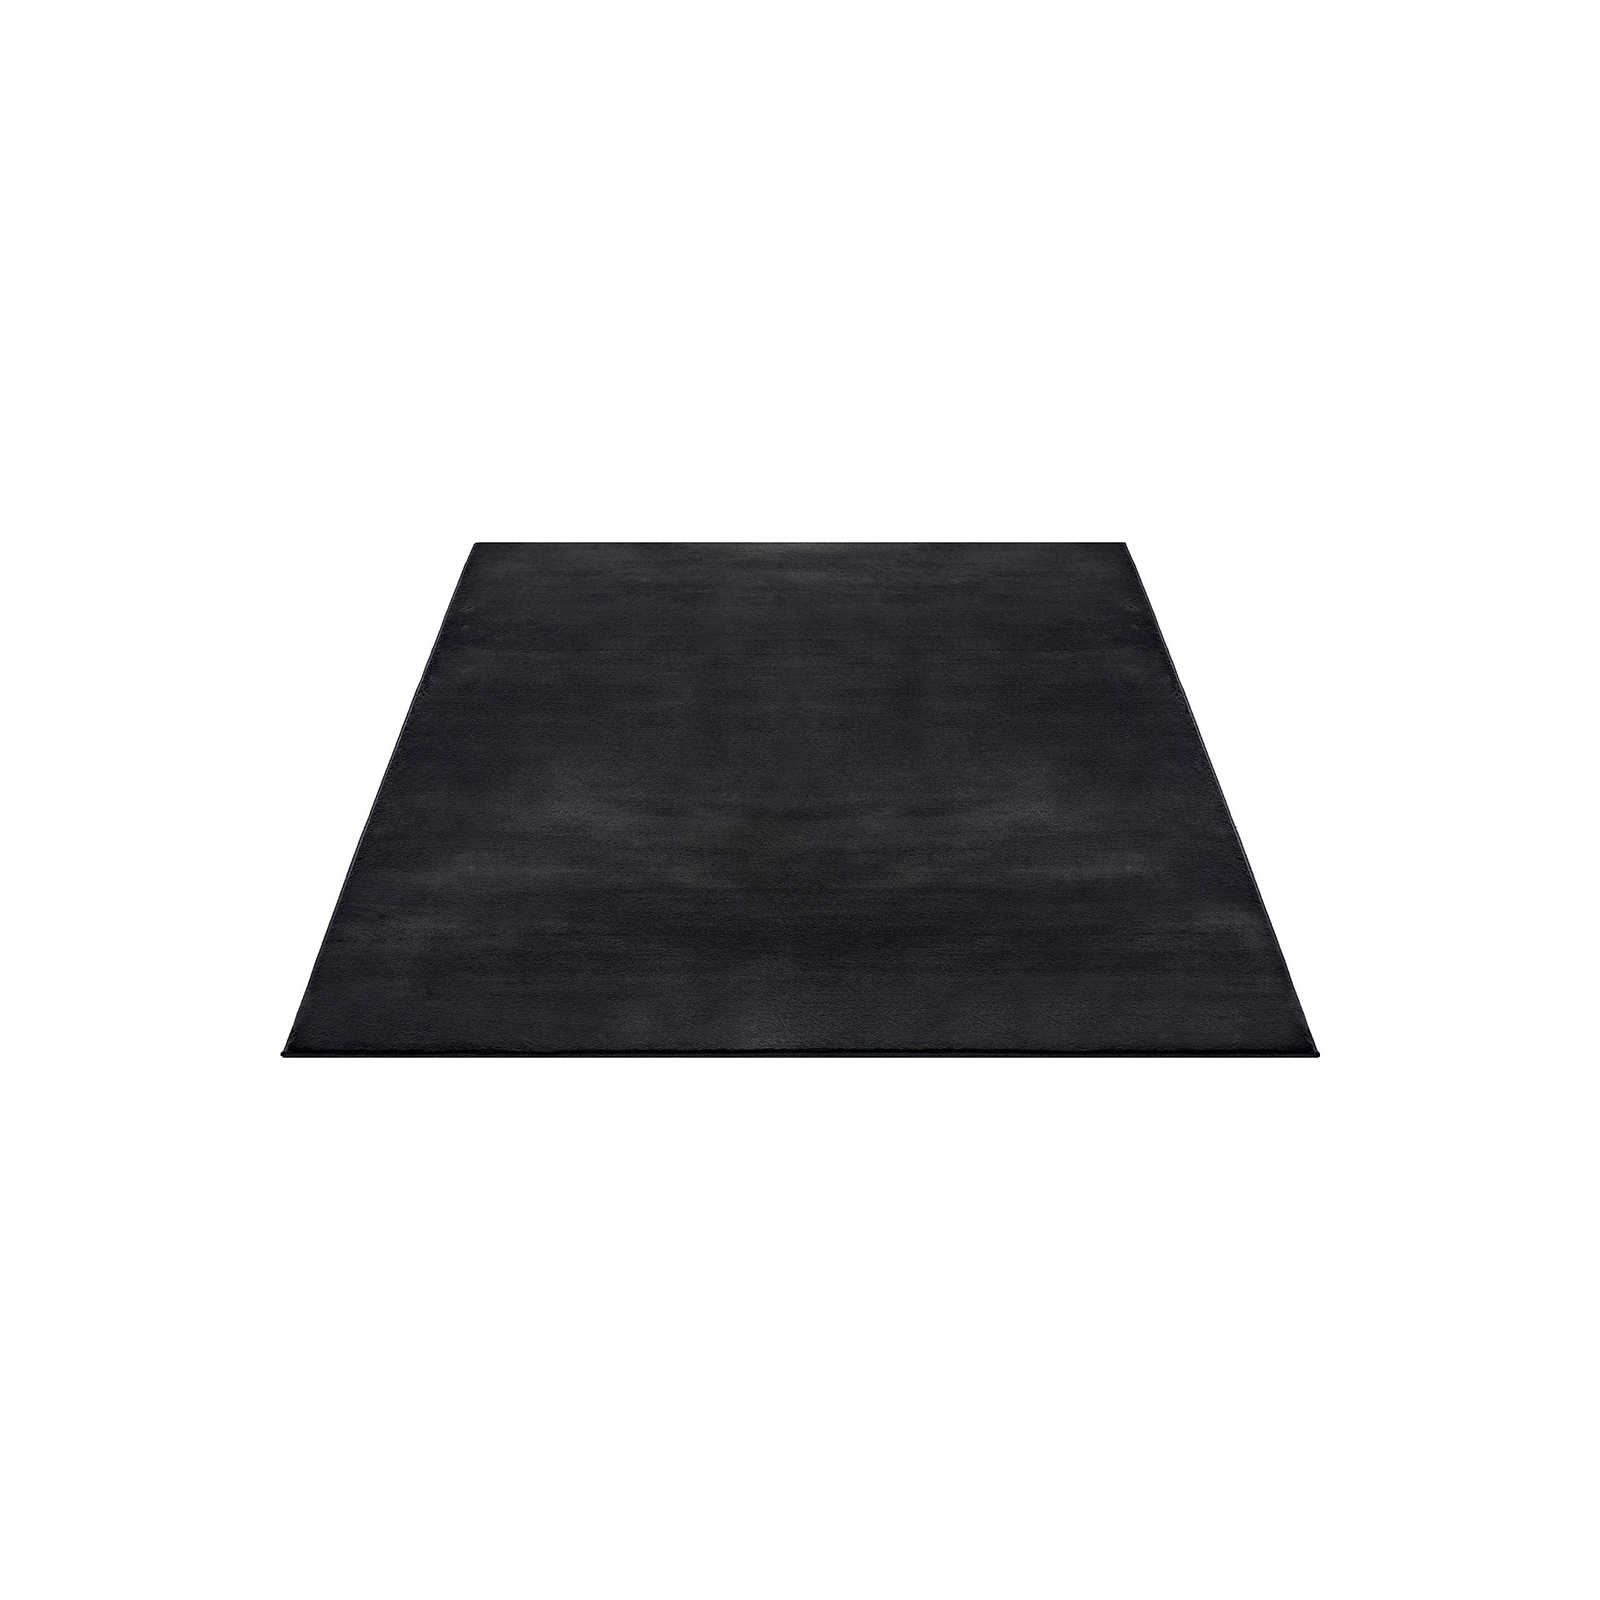 Cuddly soft high pile carpet in black - 220 x 160 cm
